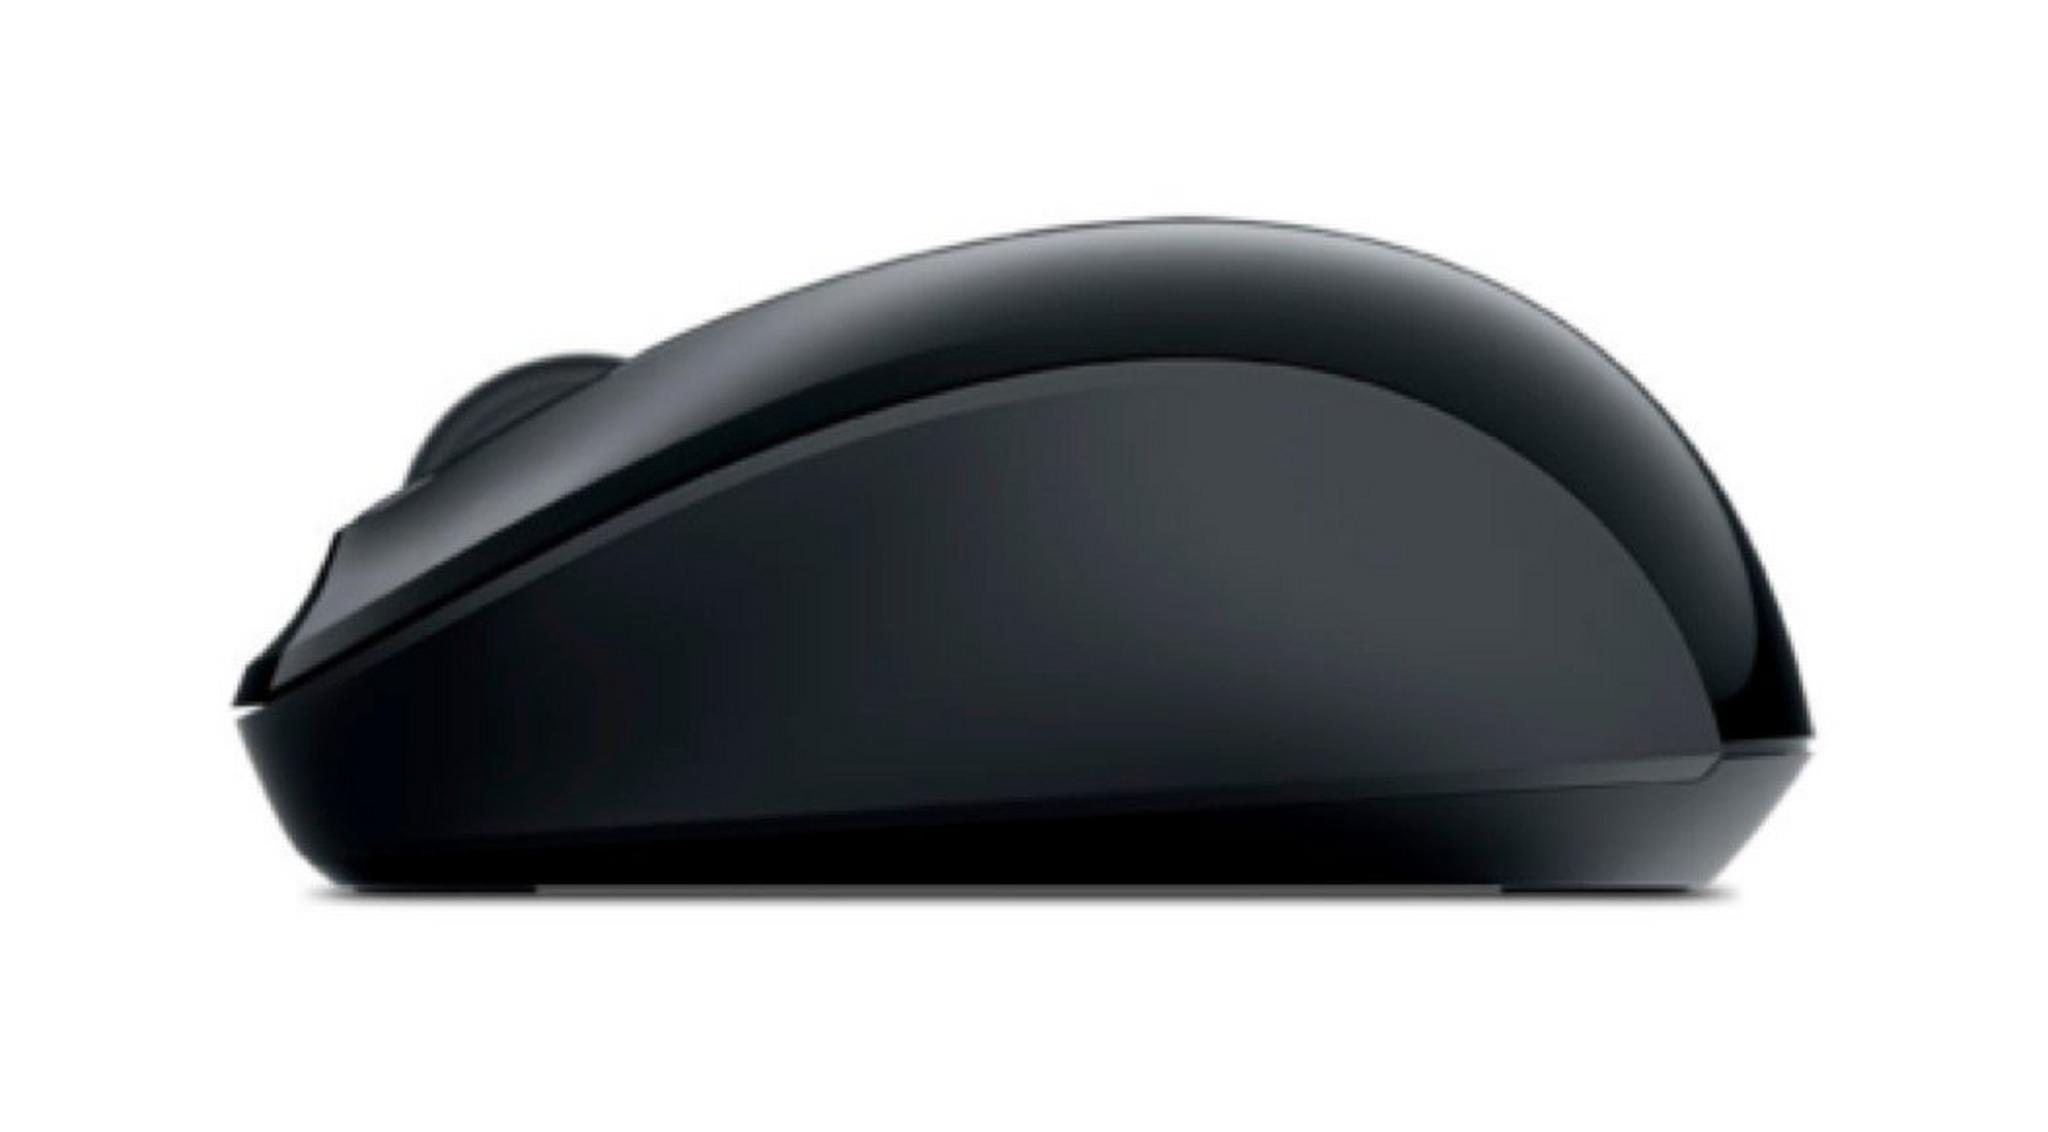 Microsoft Sculpt Wireless Mouse – Black